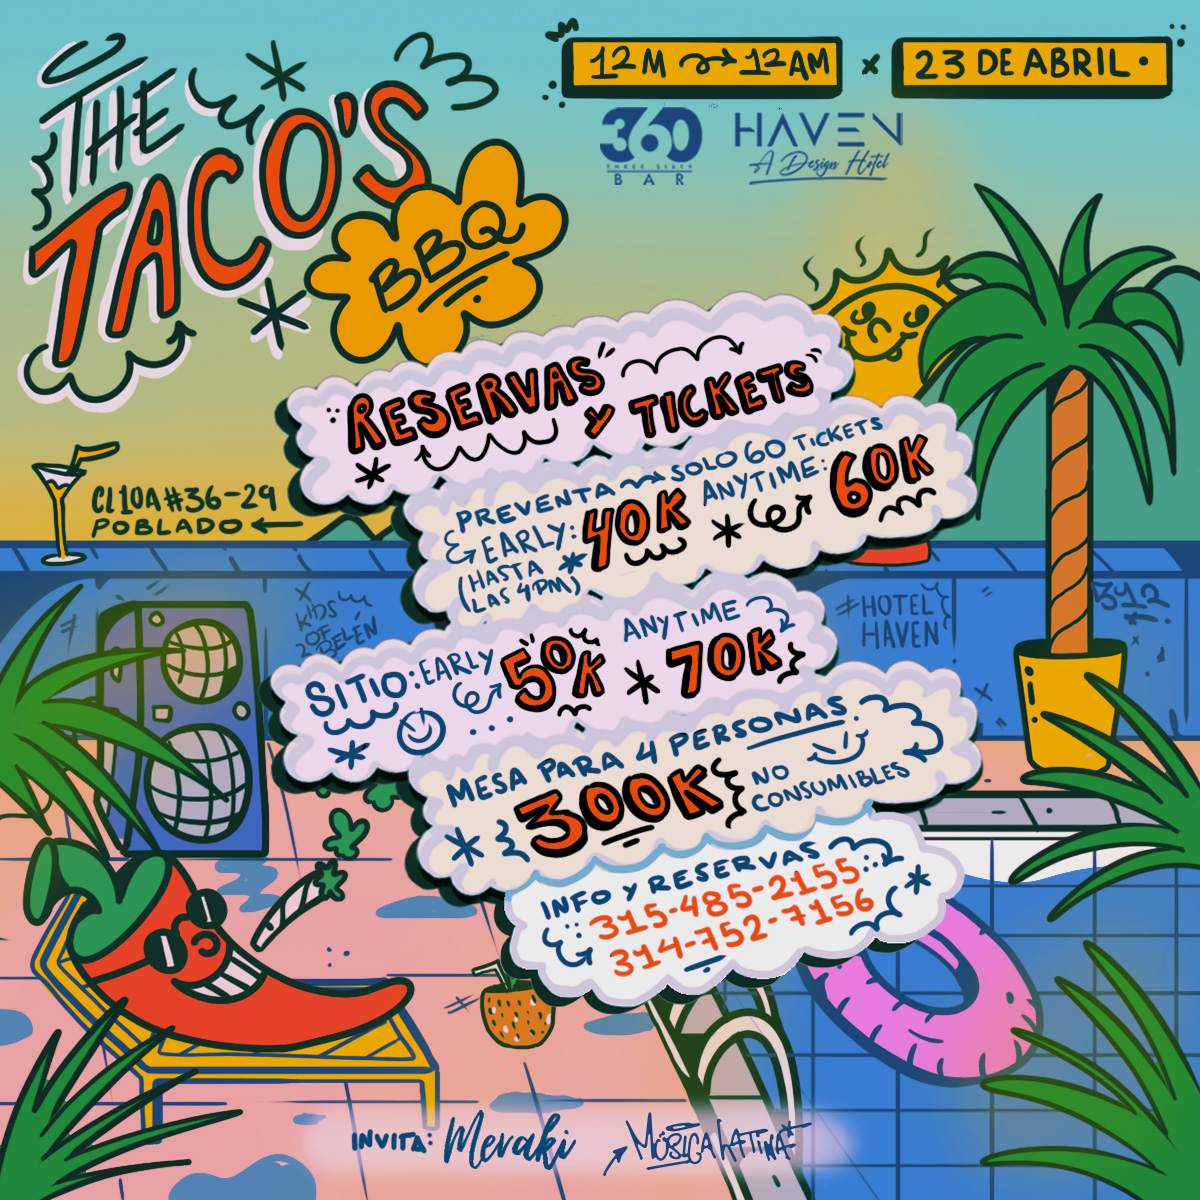 Between Us presents: The Tacos BBQ - フライヤー裏